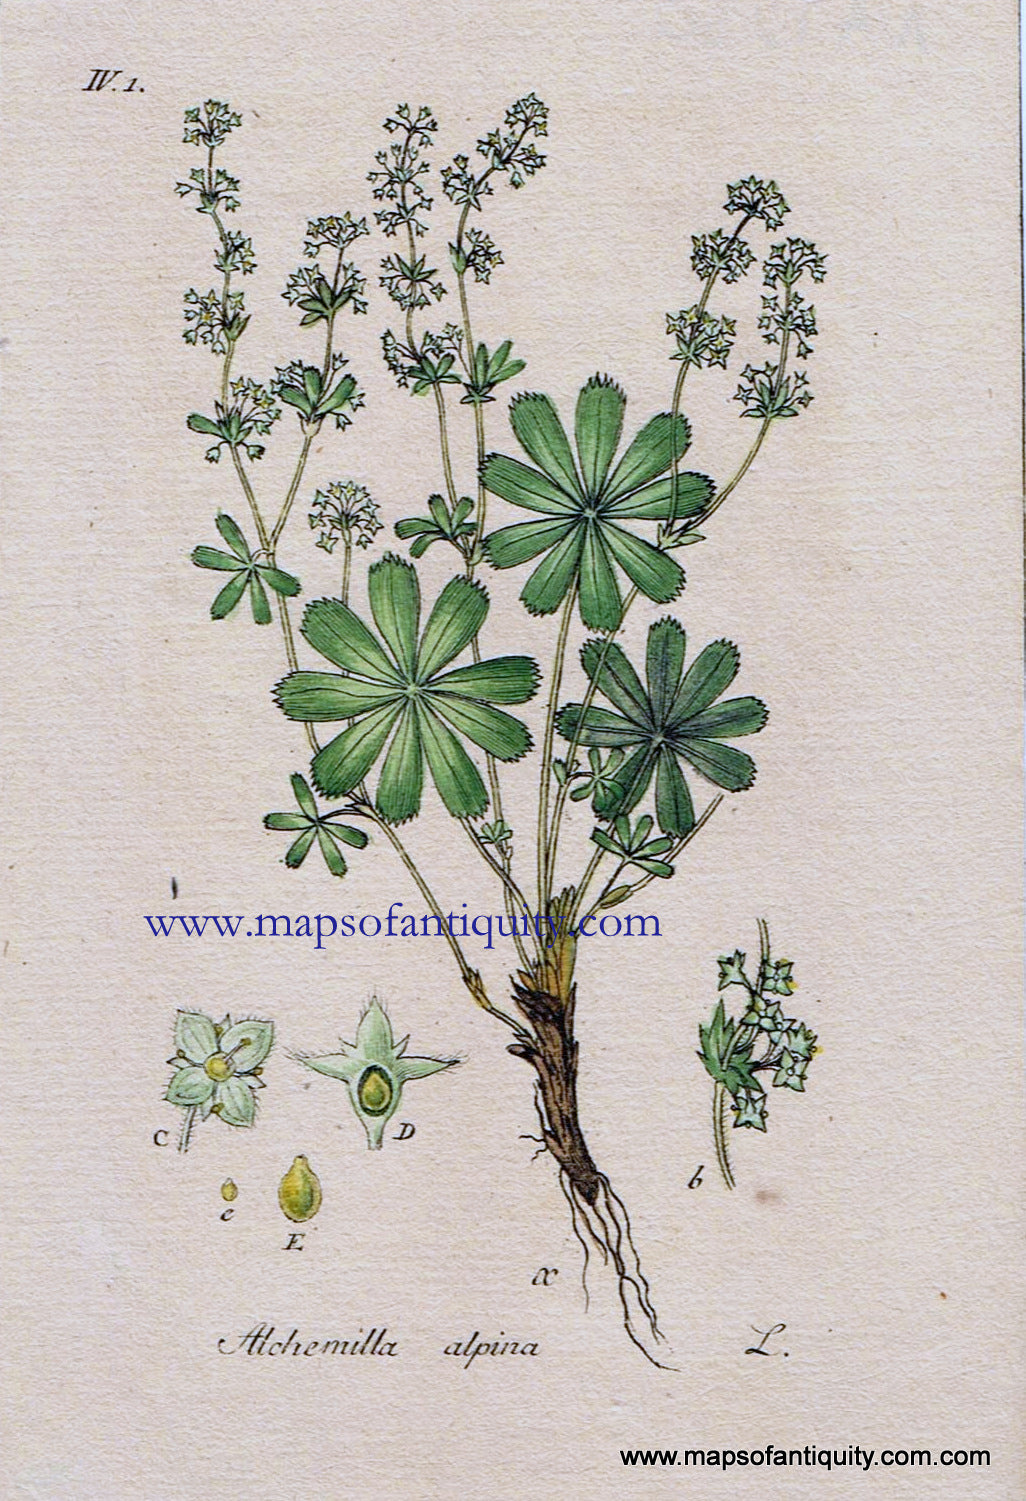 Antique-Hand-Colored-Botanical-Print-Alchemilla-alpina-L.-or-Alpine-Lady's-Mantle-Botanical-Illustration-Antique-Prints--Natural-History-Botanical-1828-Jacob-Sturm-Maps-Of-Antiquity